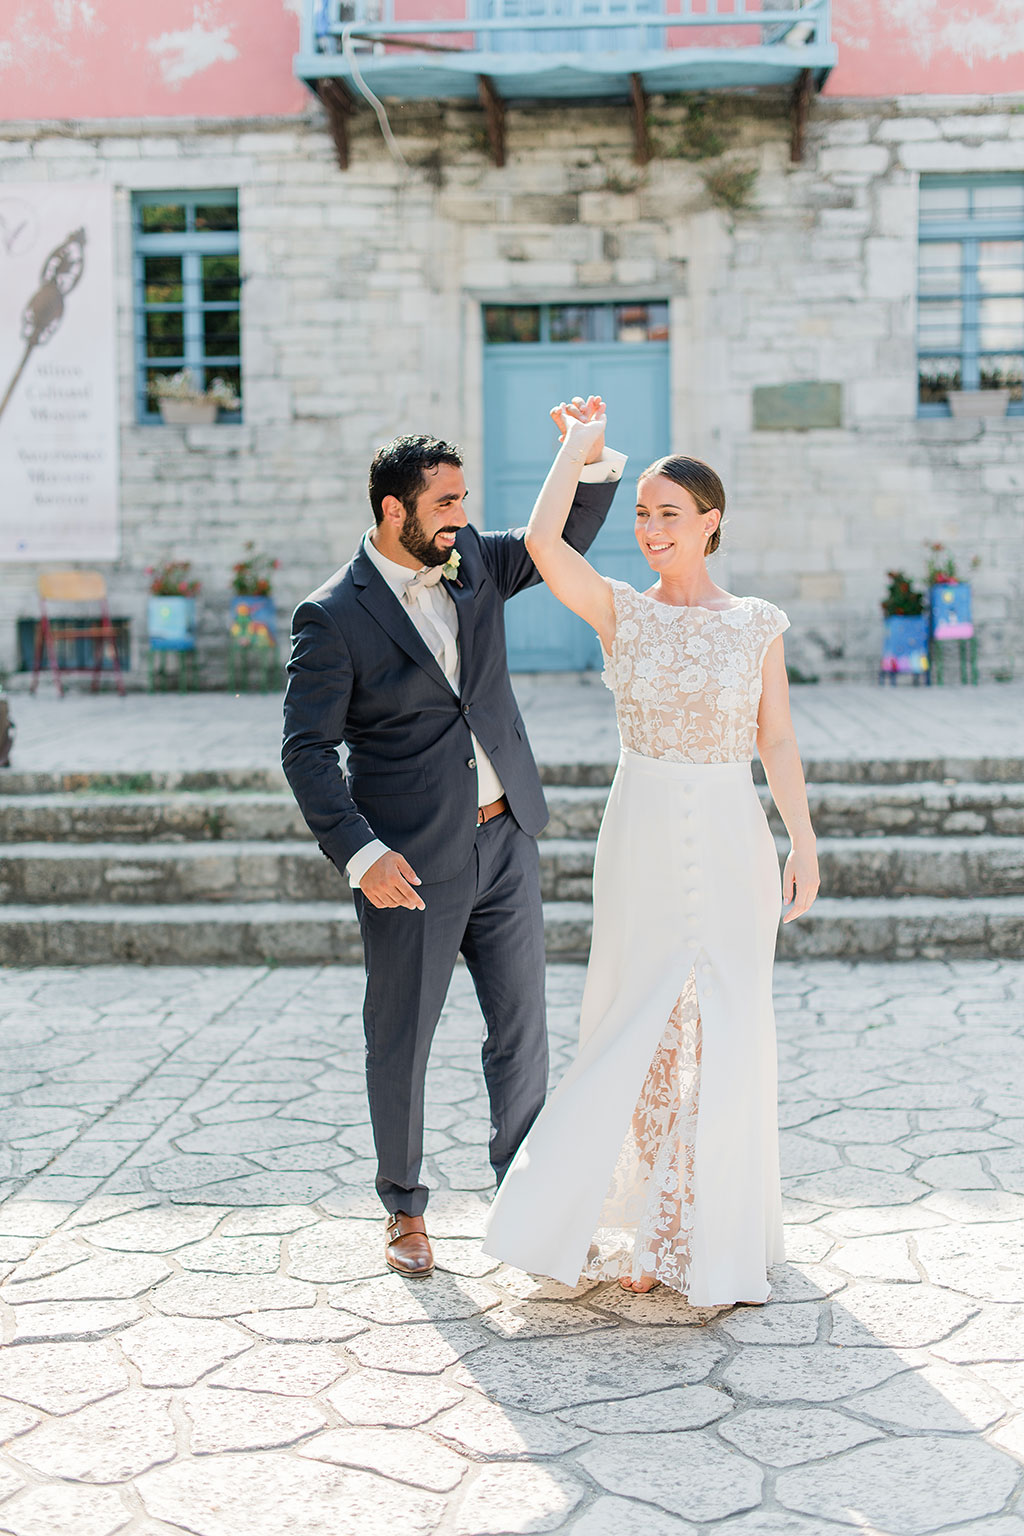 A sweet dance pose at next day wedding photoshoot in Athitos Halkidiki